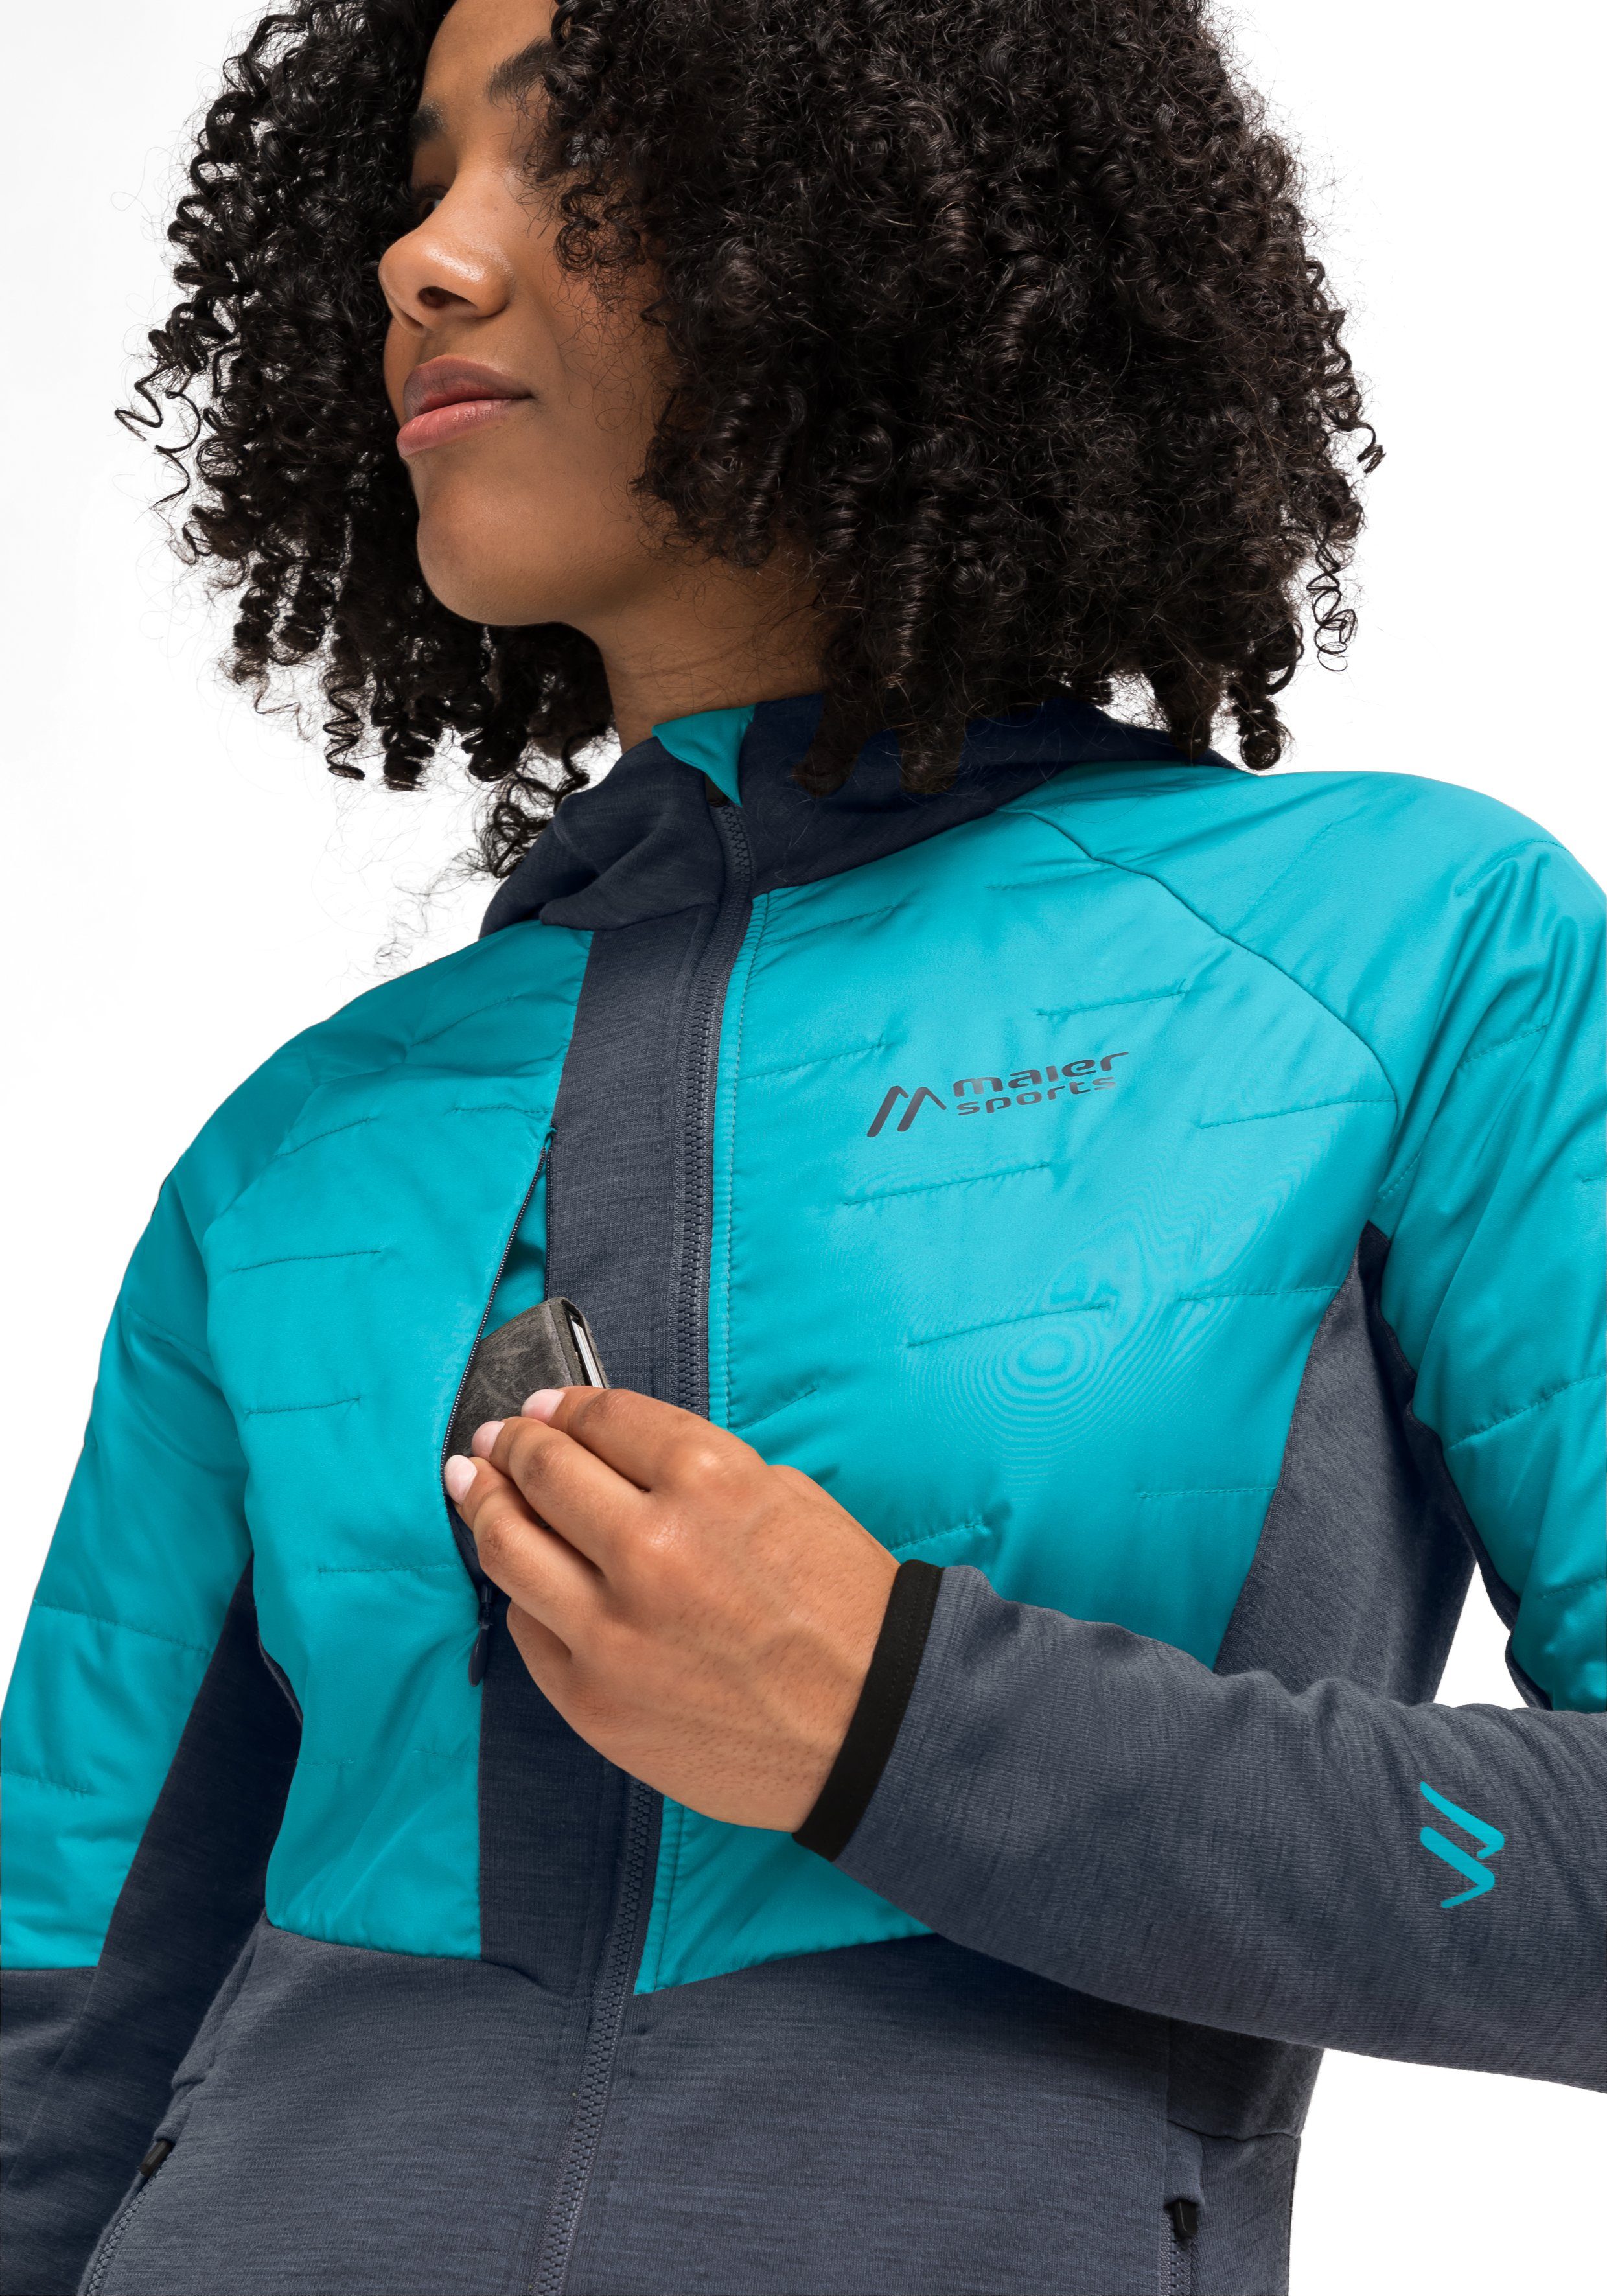 graublau Damen Lanus Sports 3 mit Maier Taschen Wanderjacke W Outdoorjacke Trekking-Jacke atmungsaktive wattiert,